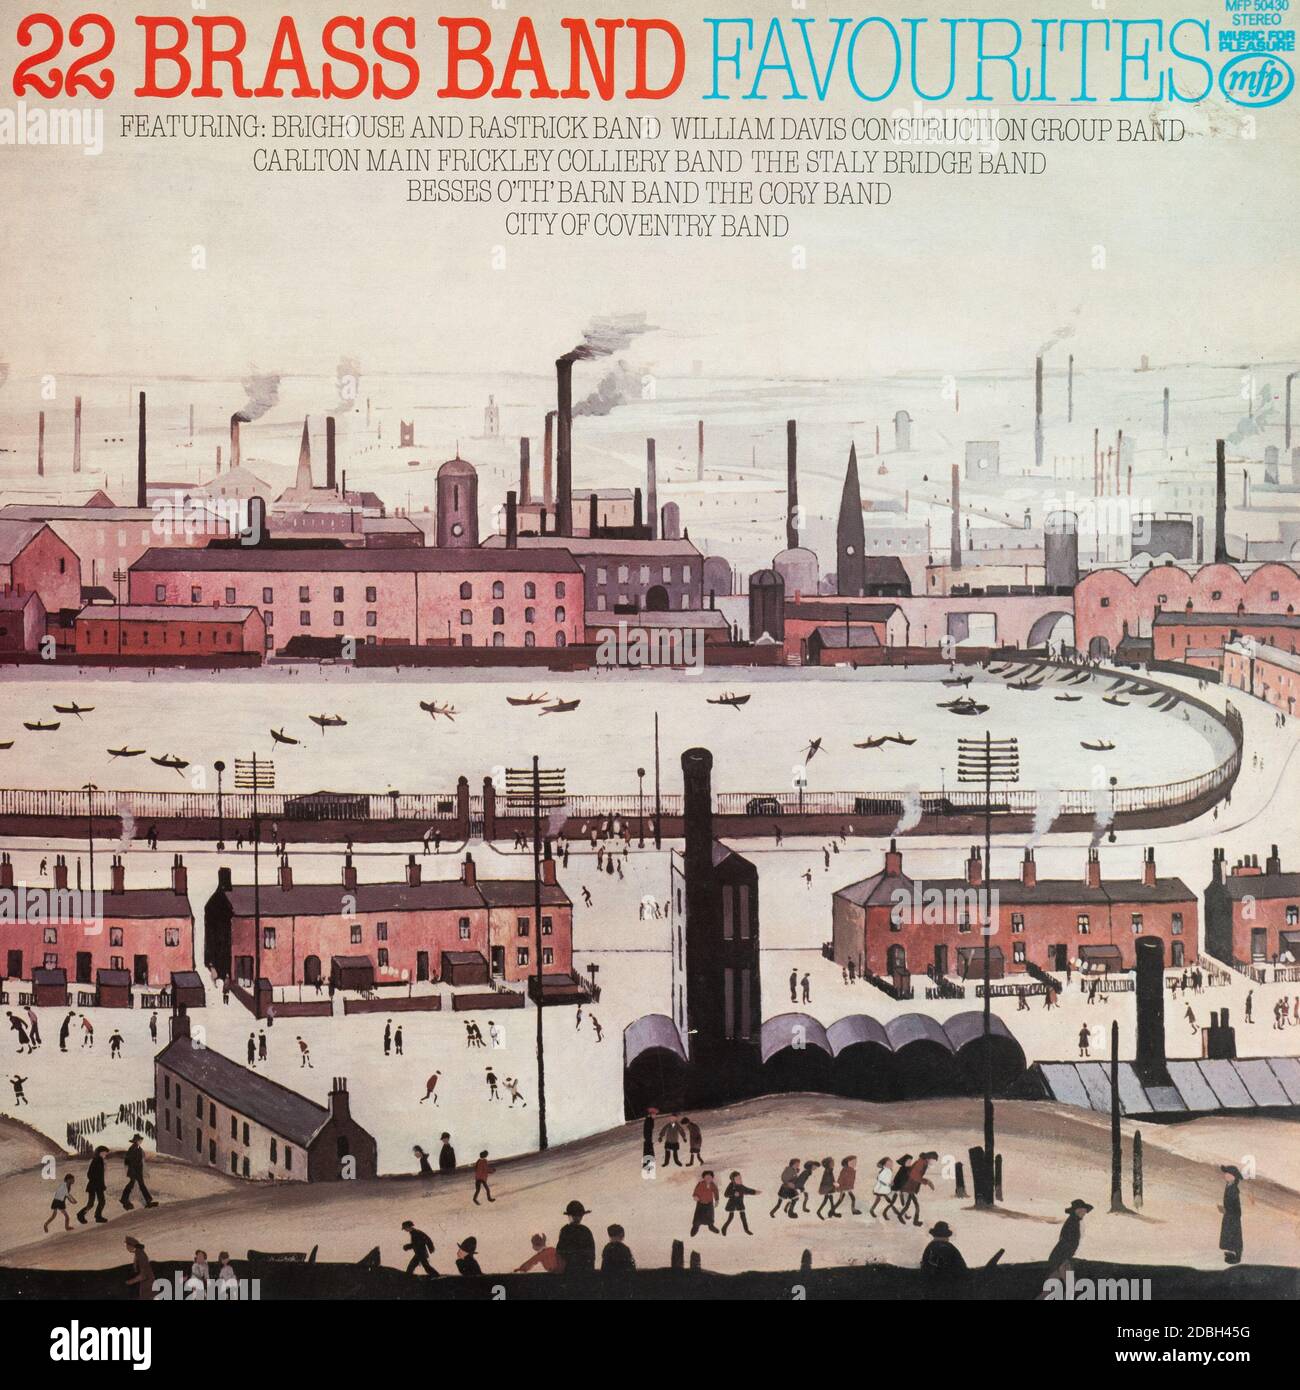 22 brass band favourites, vinyl compilation LP record album cover Stock Photo